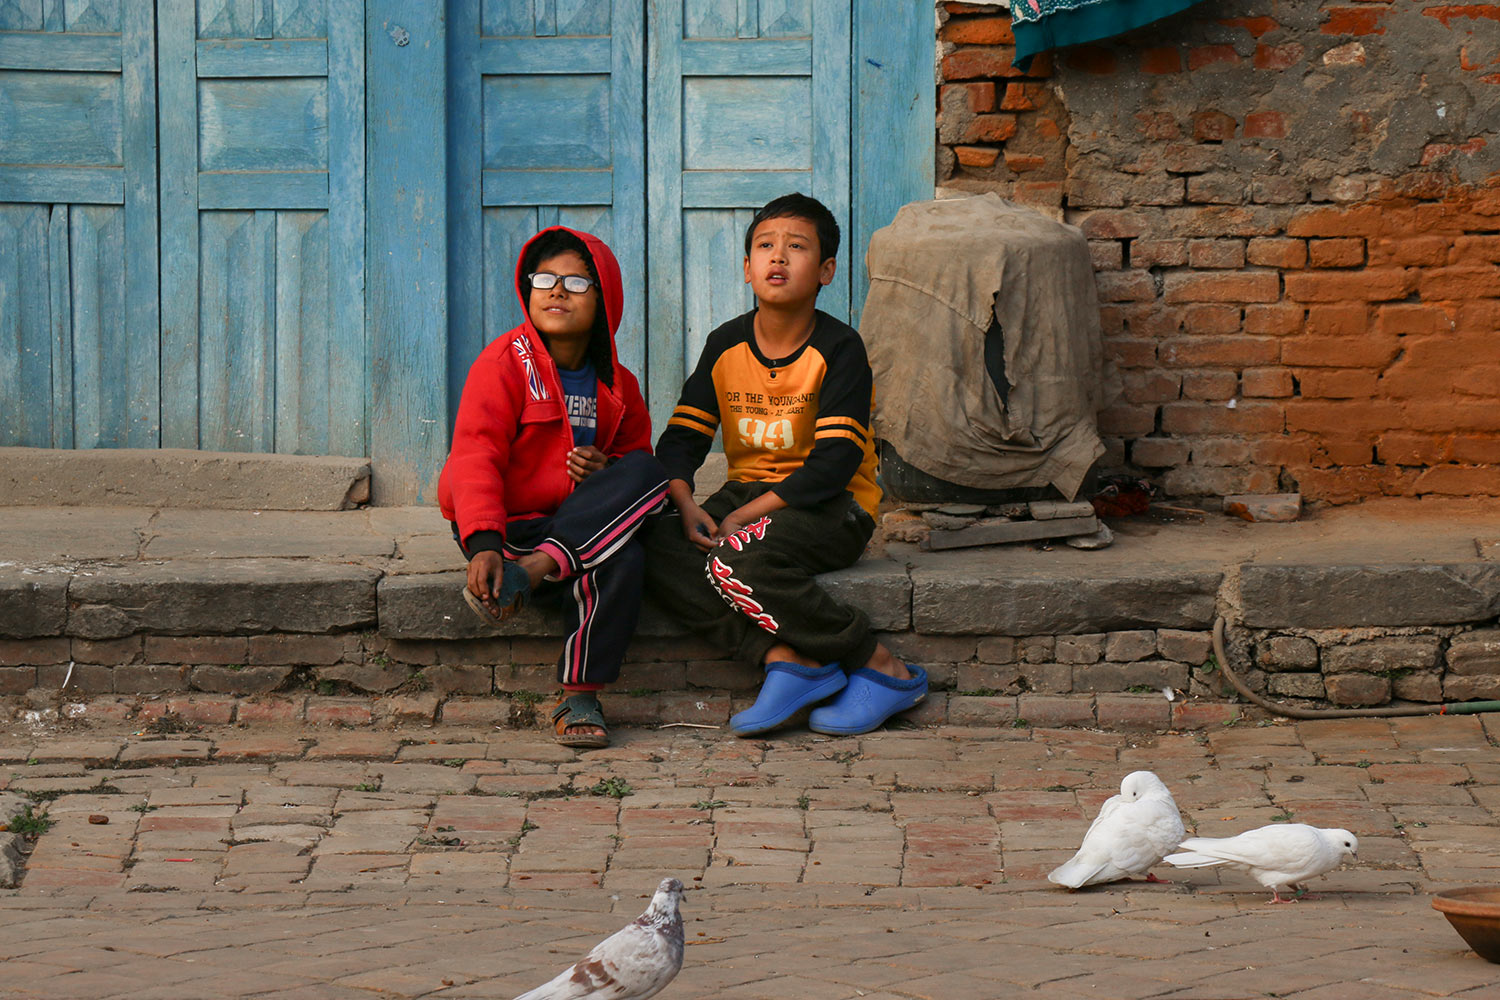 Enfants, Katmandou, Népal / Kids, Katmandou, Nepal